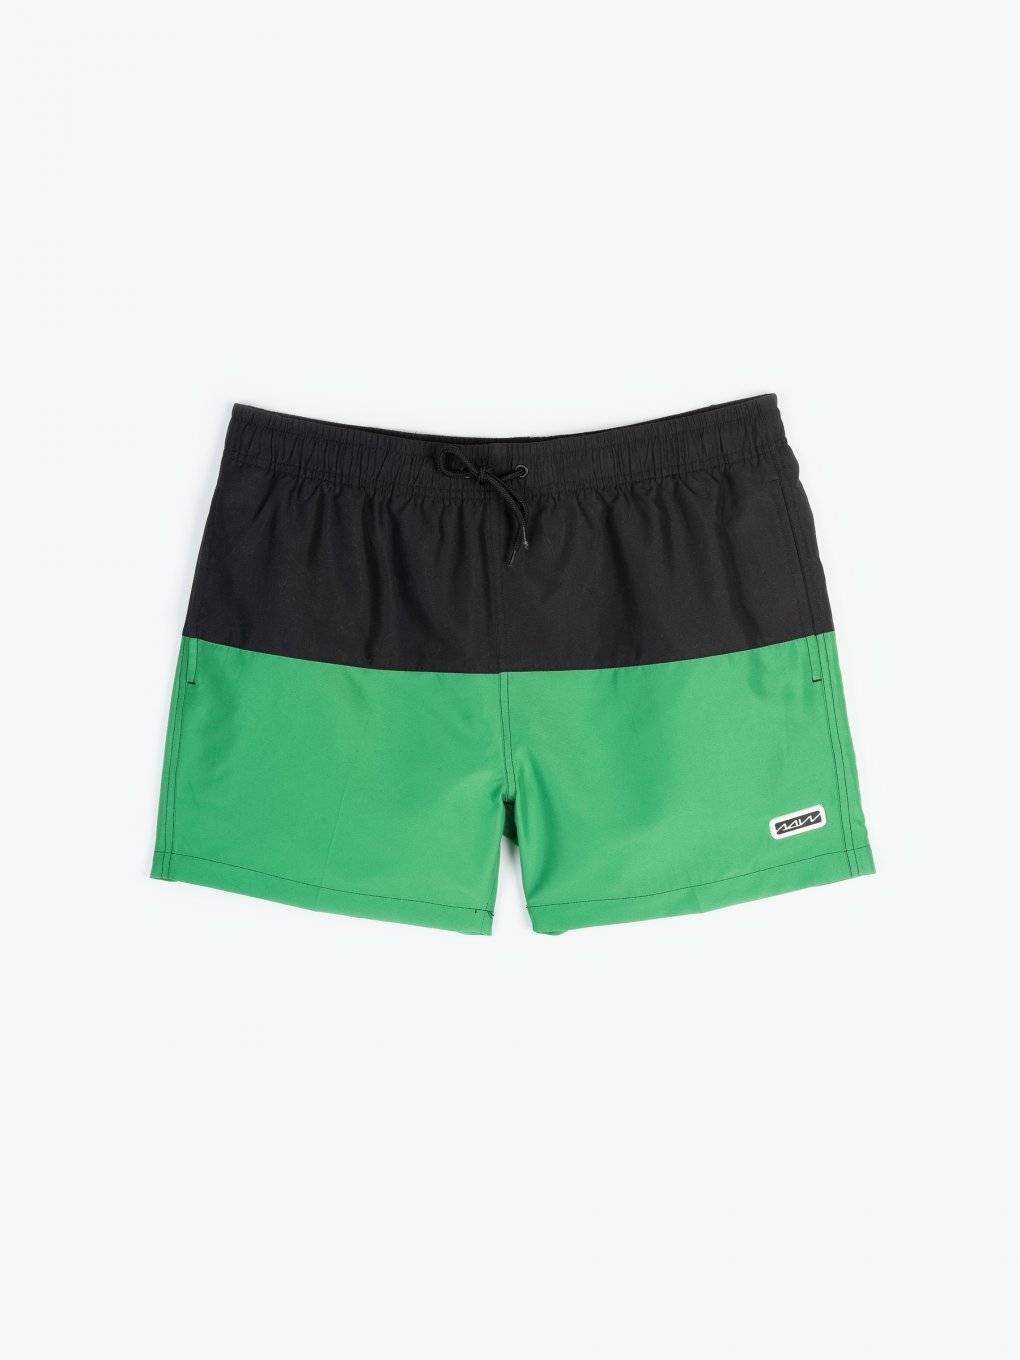 Colour block swim shorts